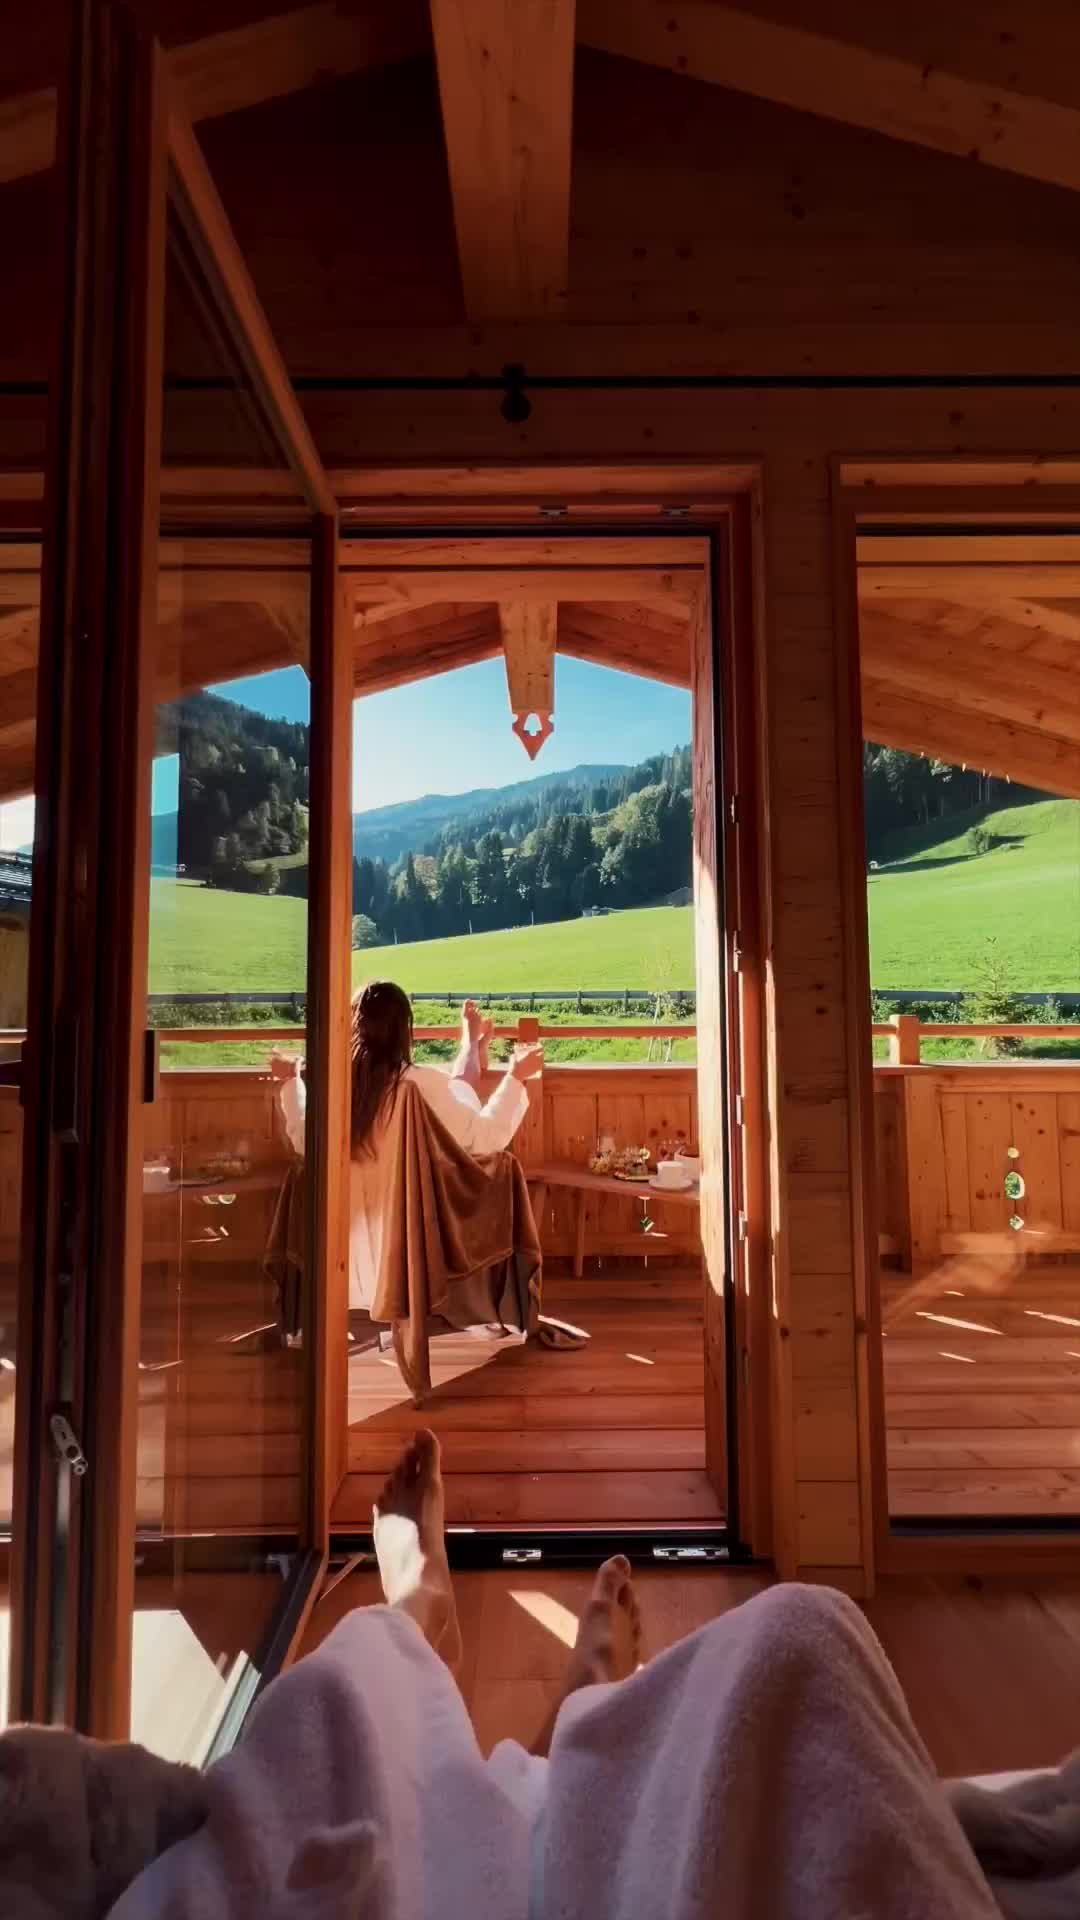 Stunning Breakfast Views at Hygna Chalets, Austria